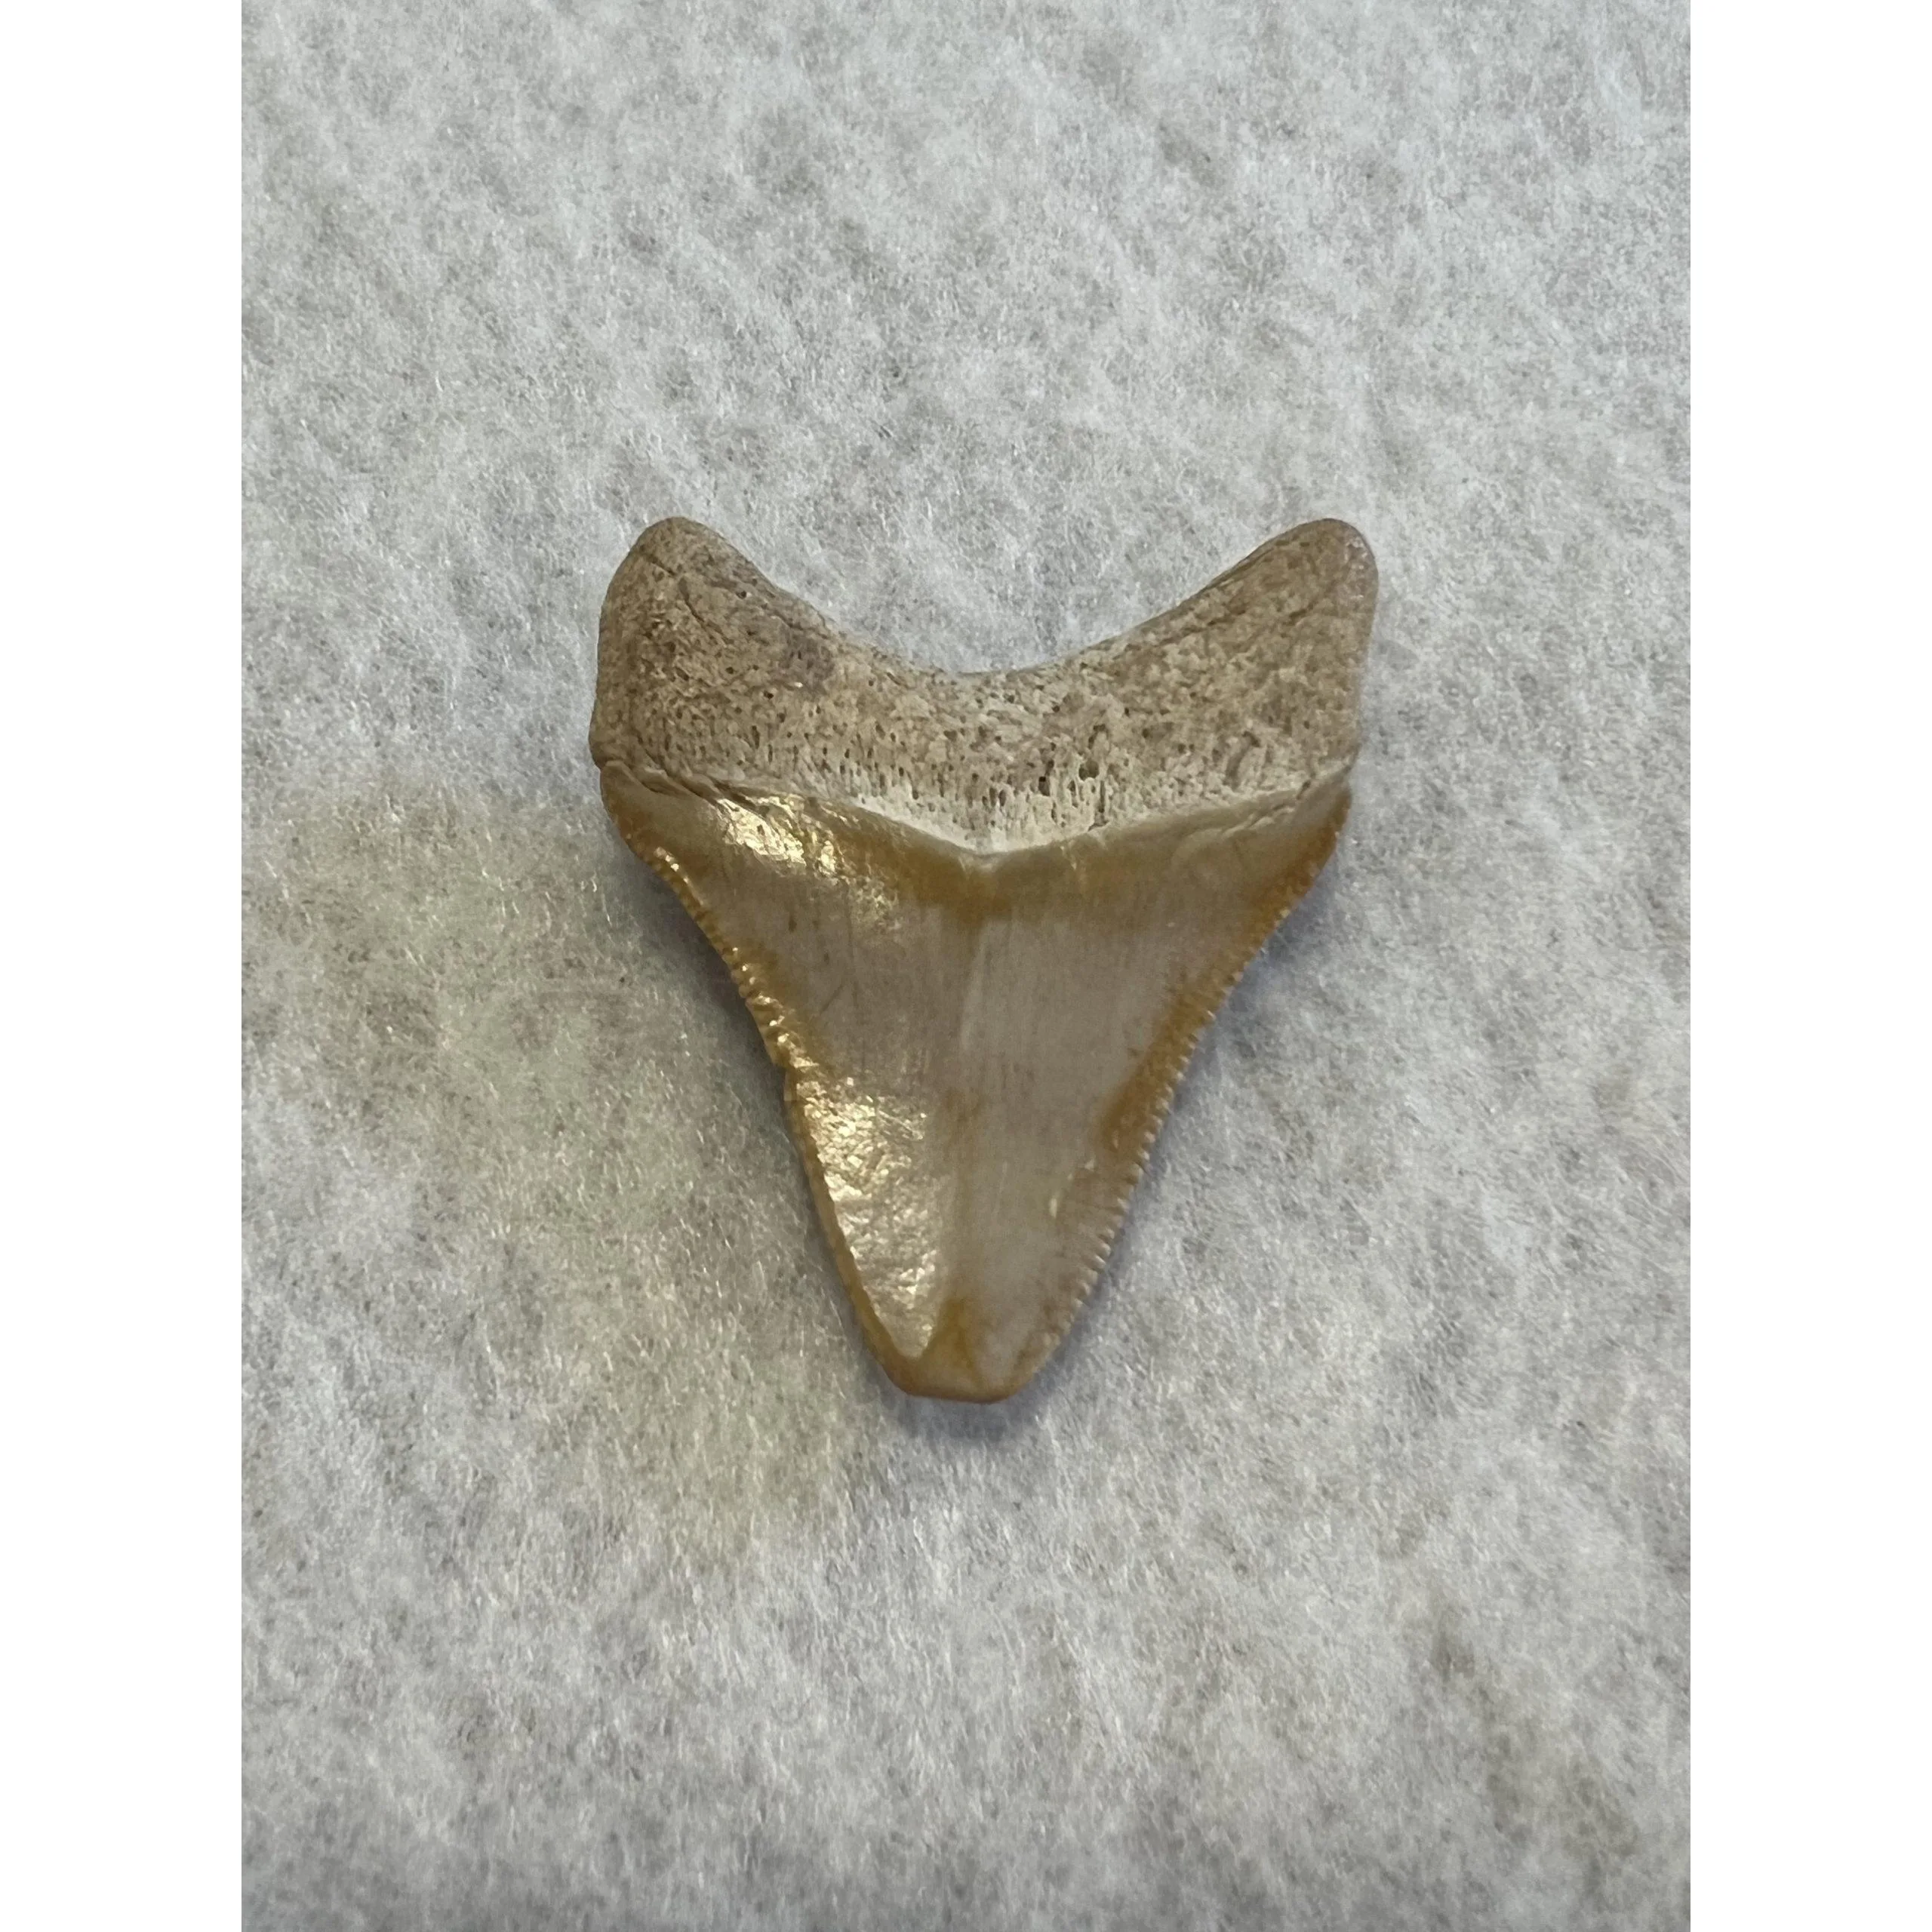 Megalodon Tooth  Bone Valley, Florida 1.76 inch Prehistoric Online